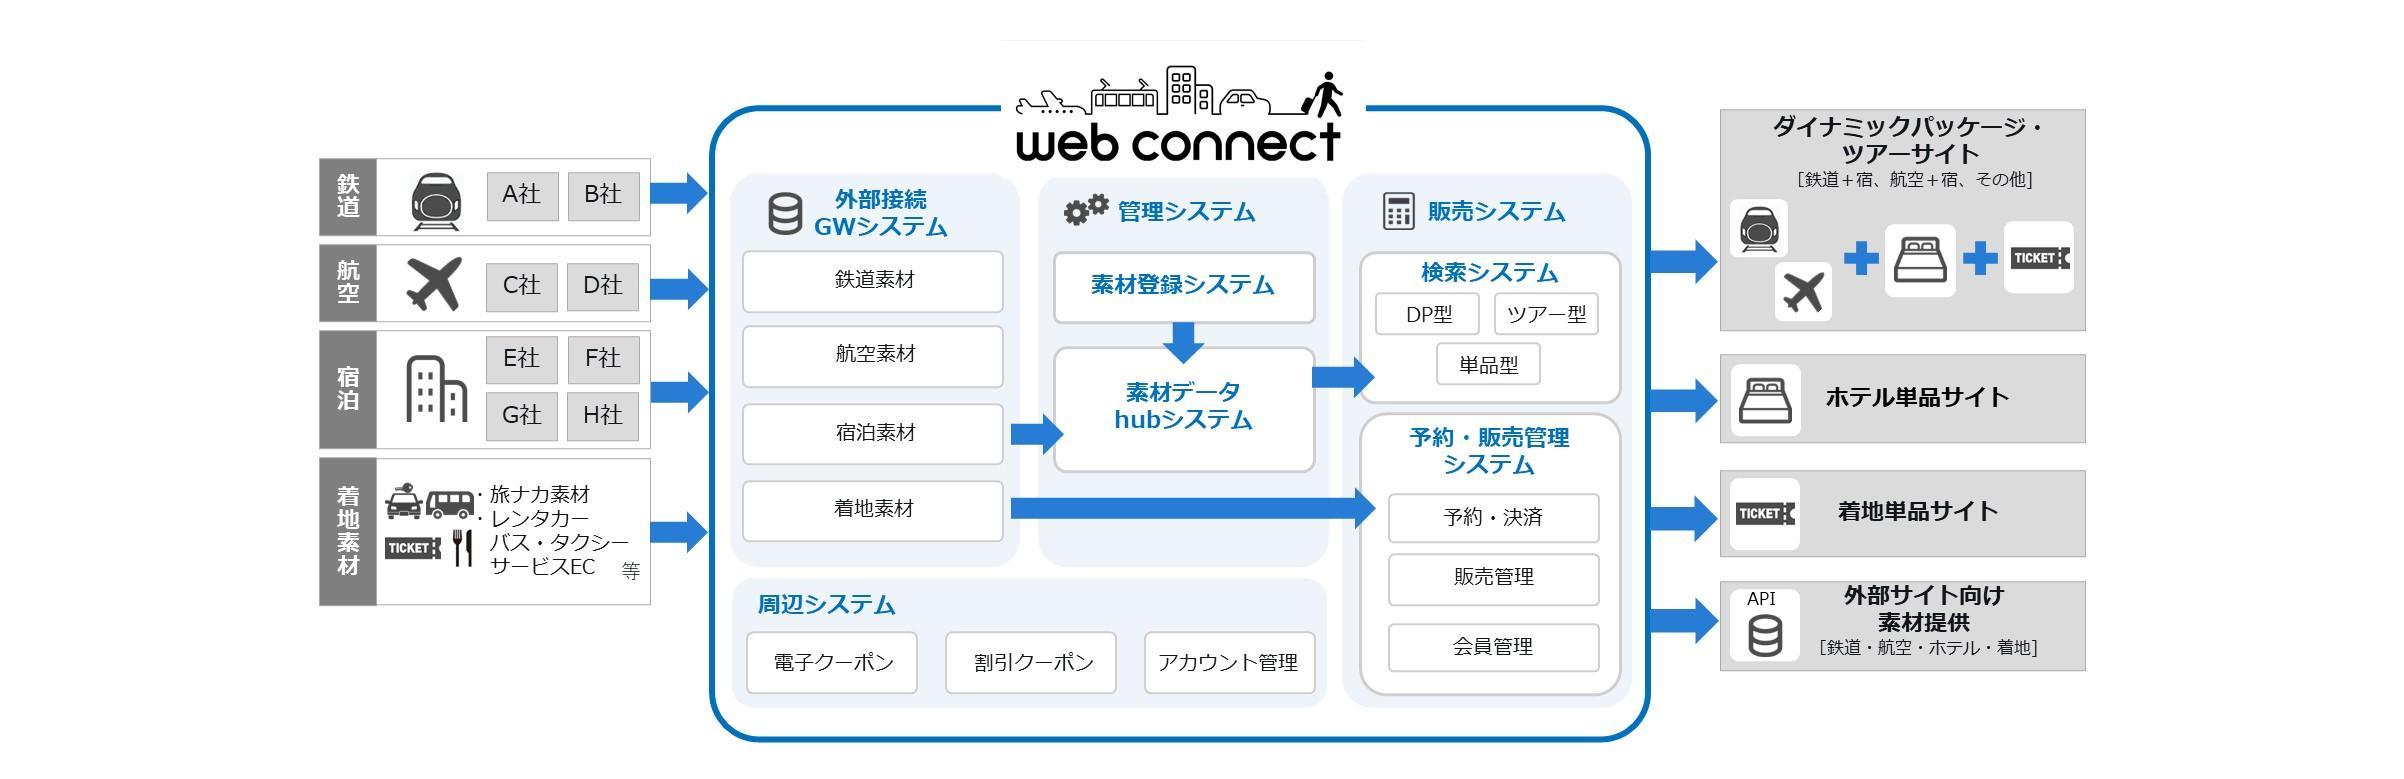 wbc_diagram_new.jpg